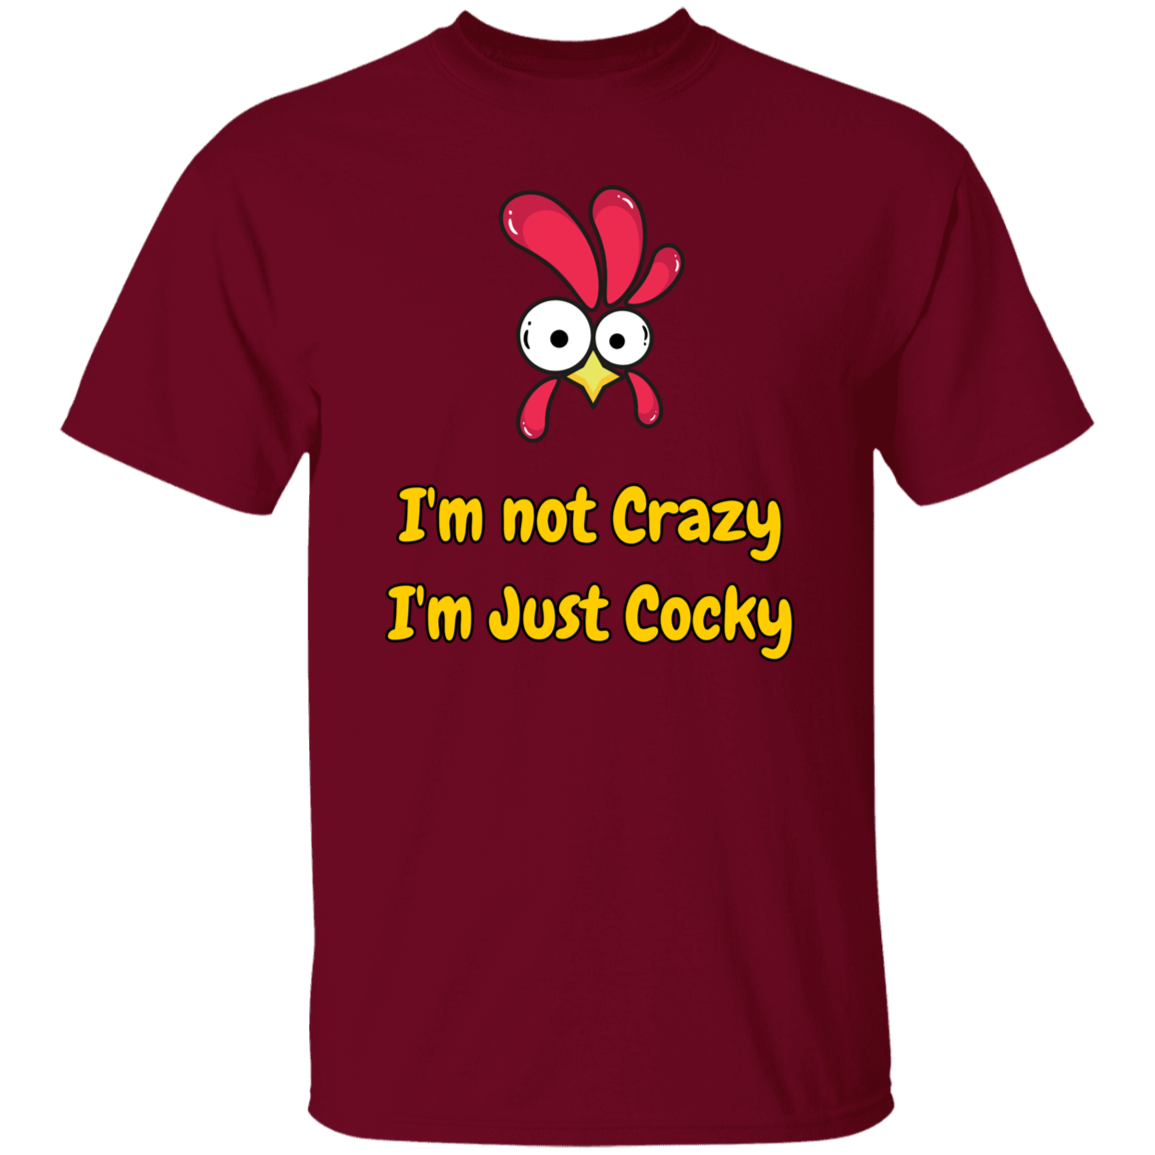 I'm not Crazy, I'm Just Cocky - Men's T-Shirt